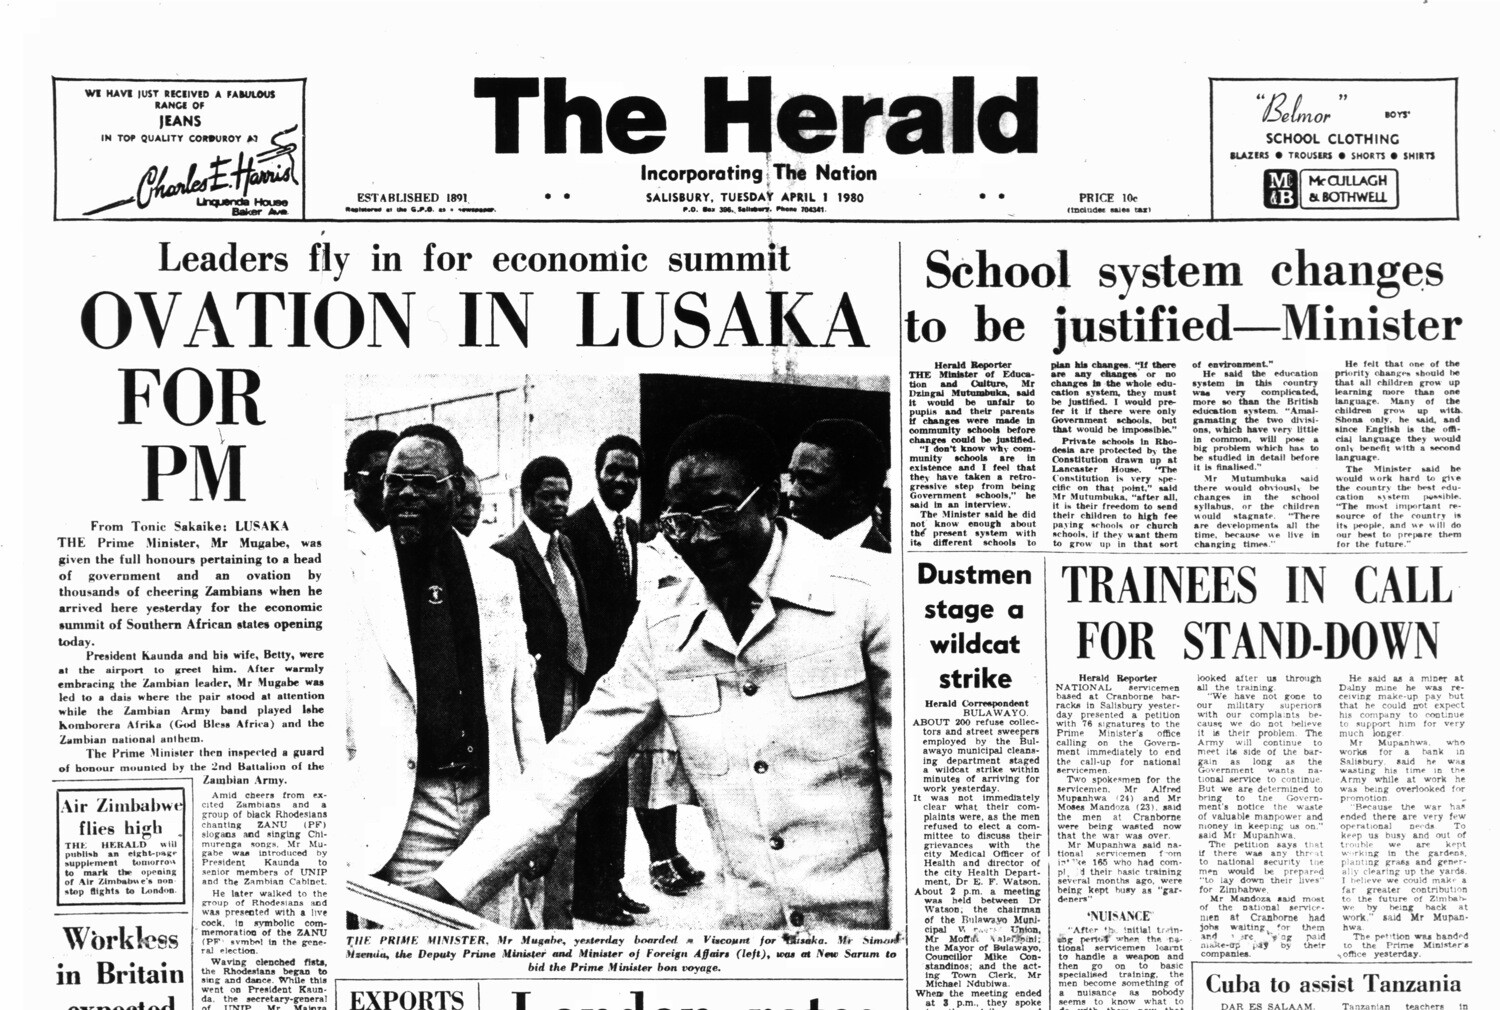 The Herald - 1 April 1980